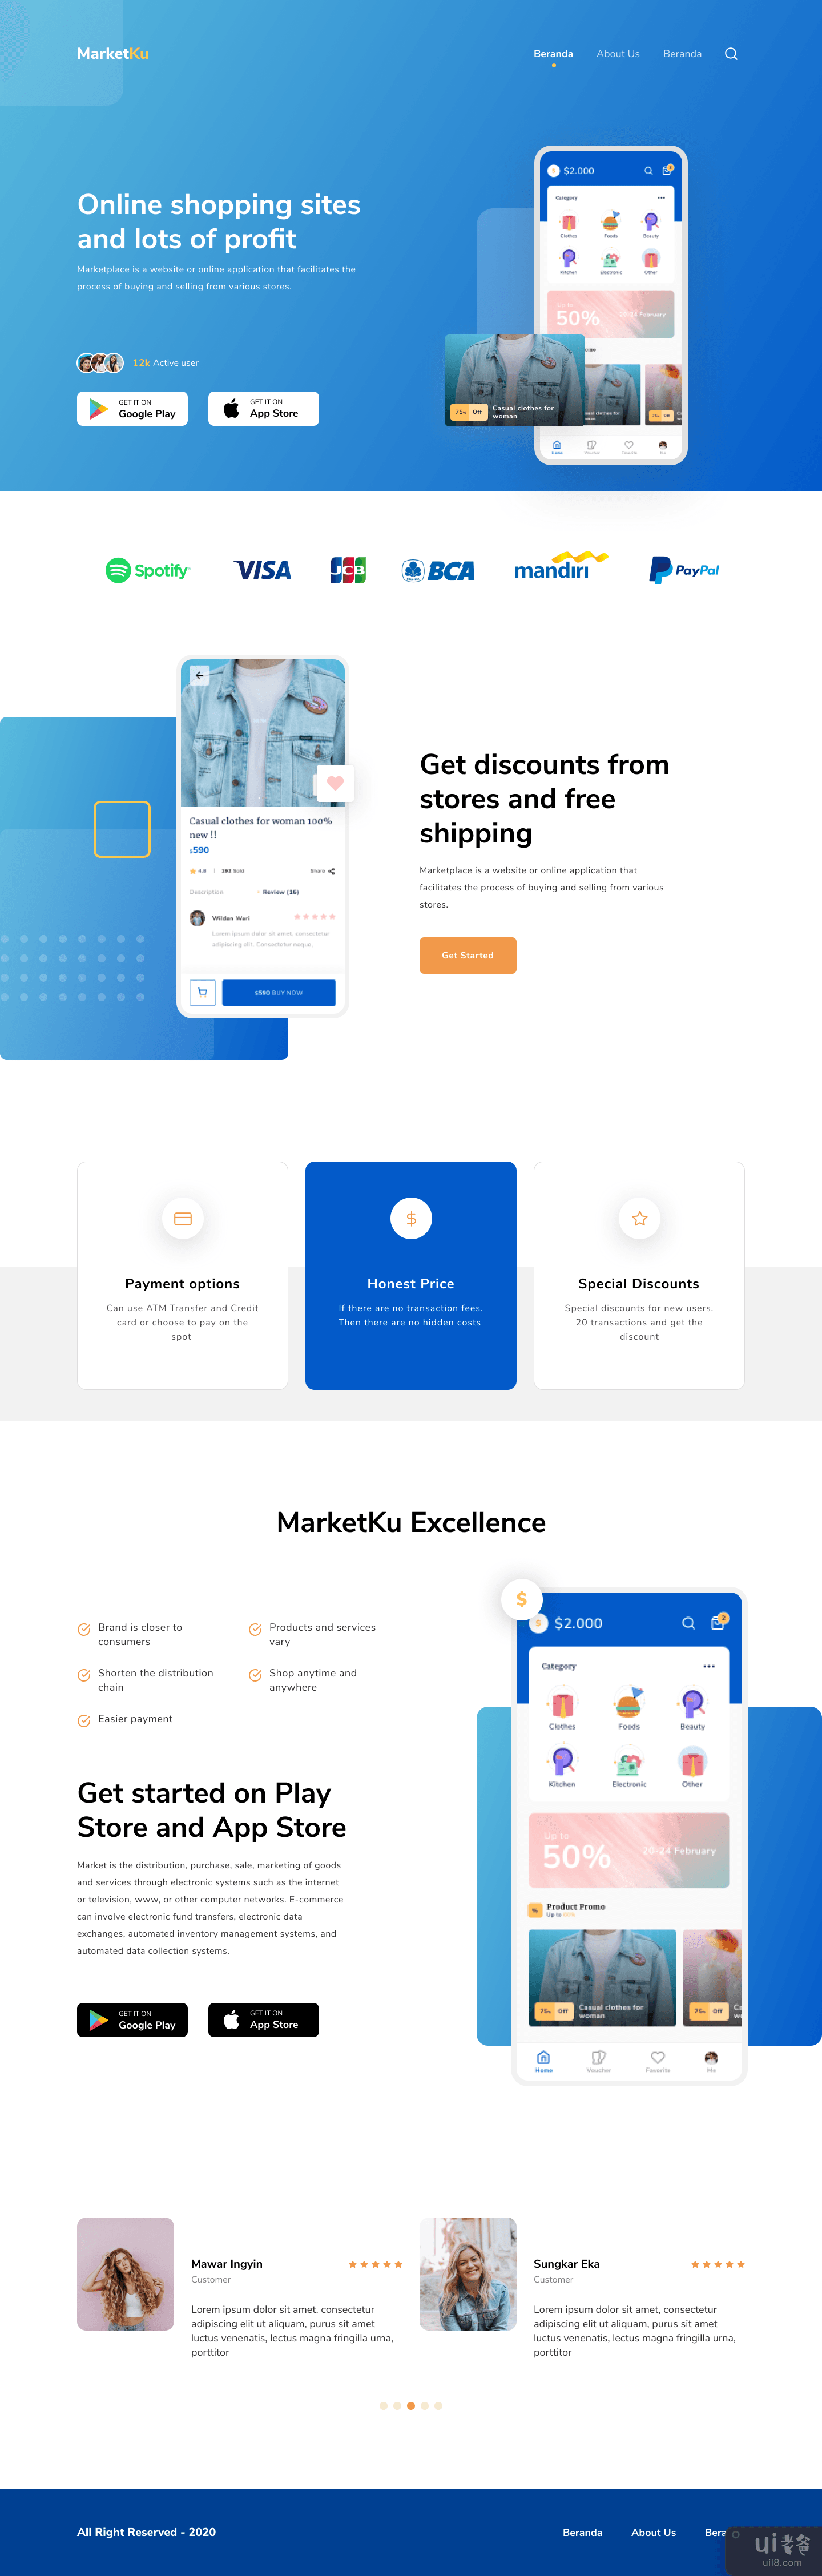 MarketKu登陆页面(MarketKu Landing Page)插图